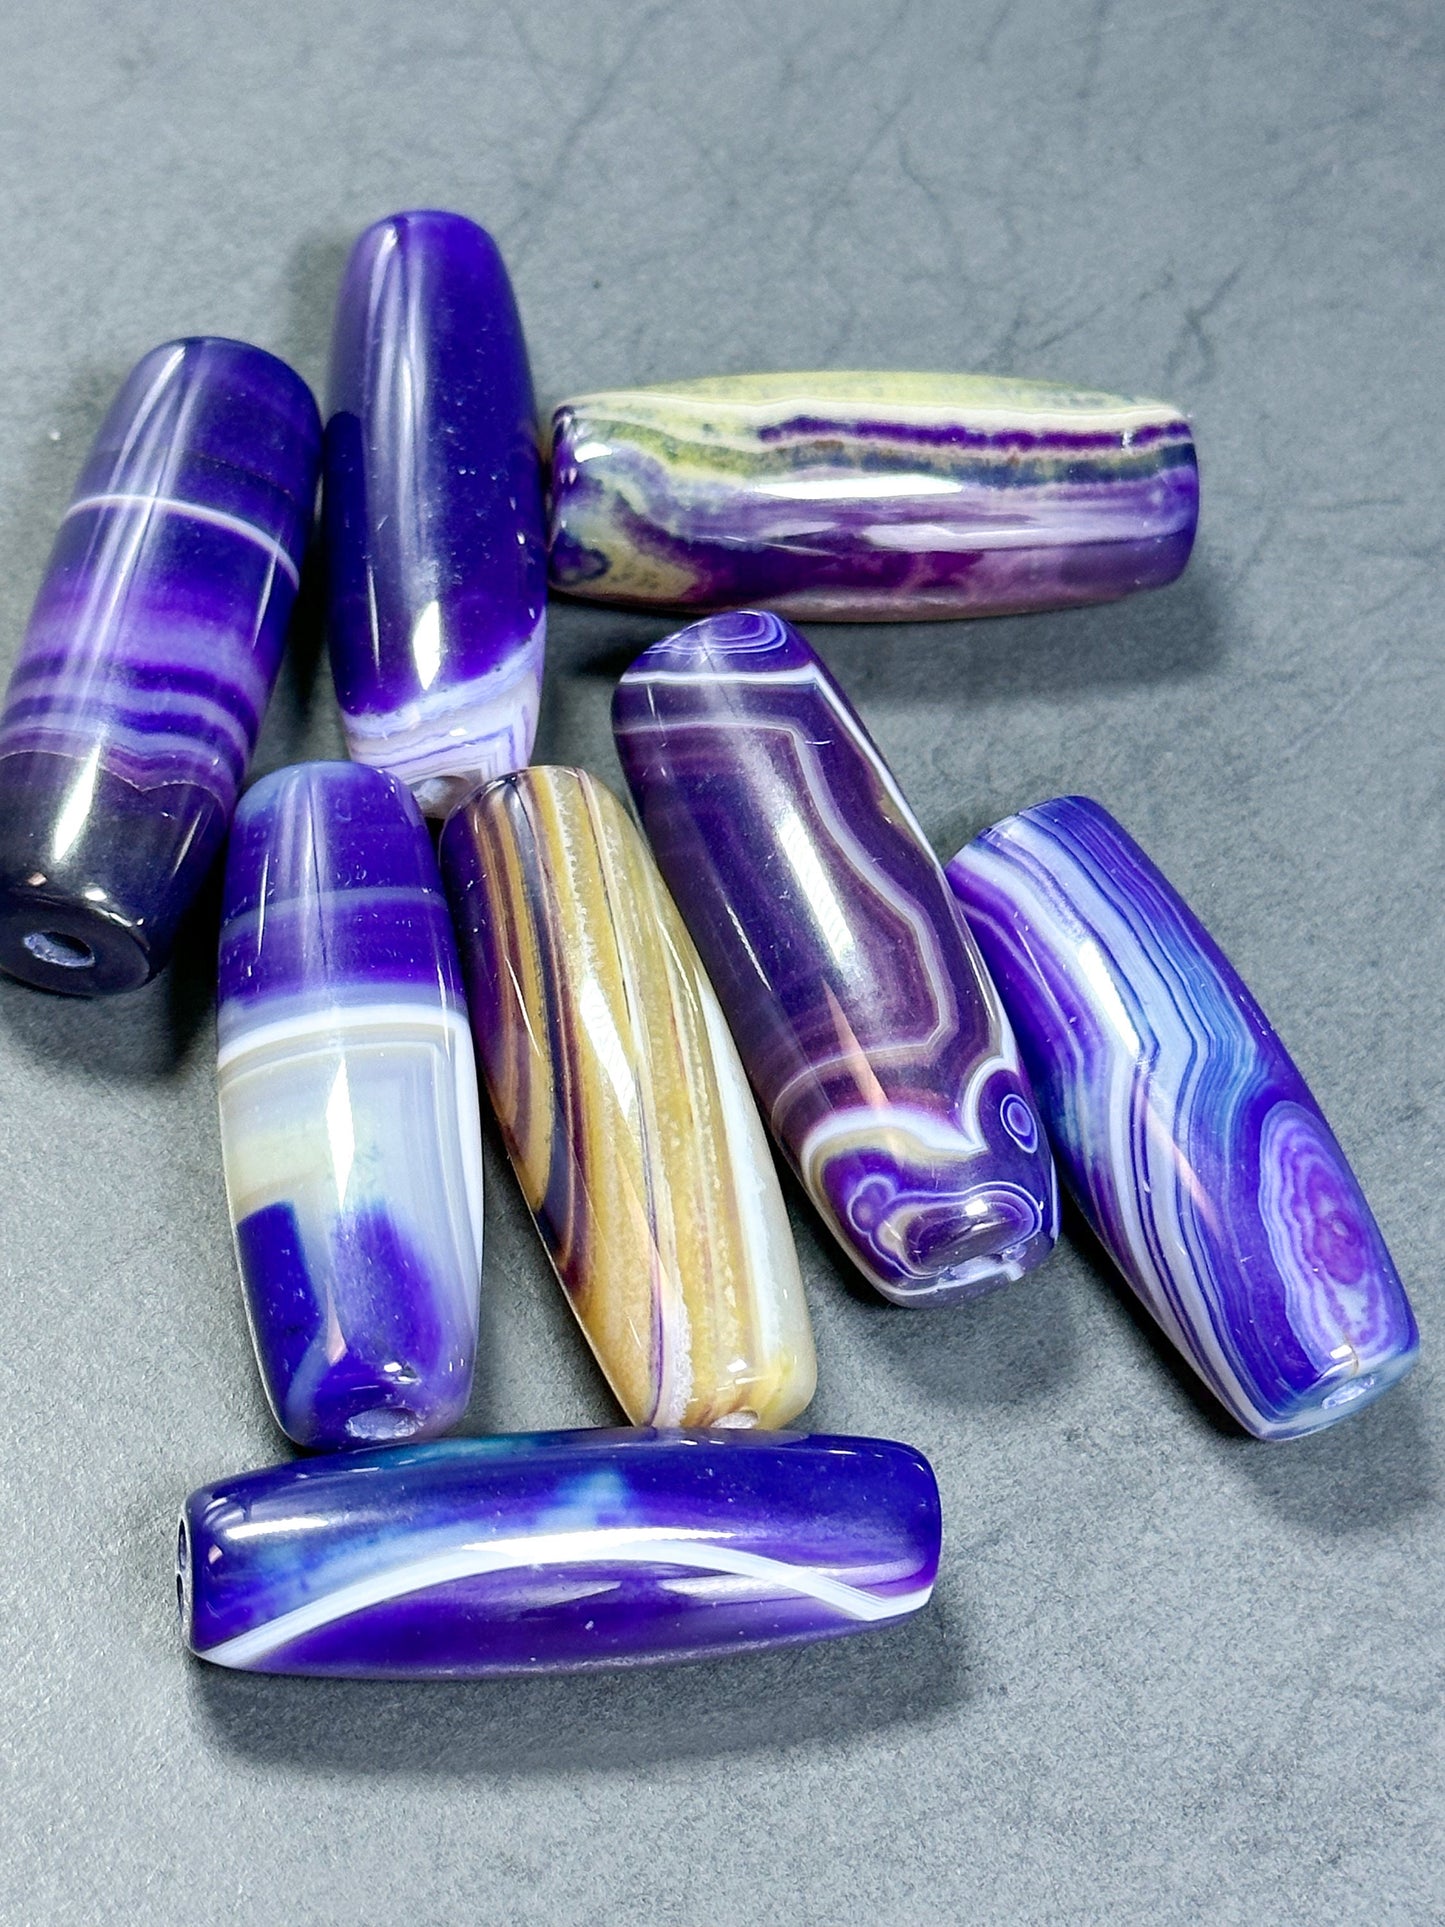 NATURAL Botswana Agate Gemstone Bead 40x13mm Barrel/Tube Shape Beads, Gorgeous Purple White Color Botswana Agate Gemstone, LOOSE Beads